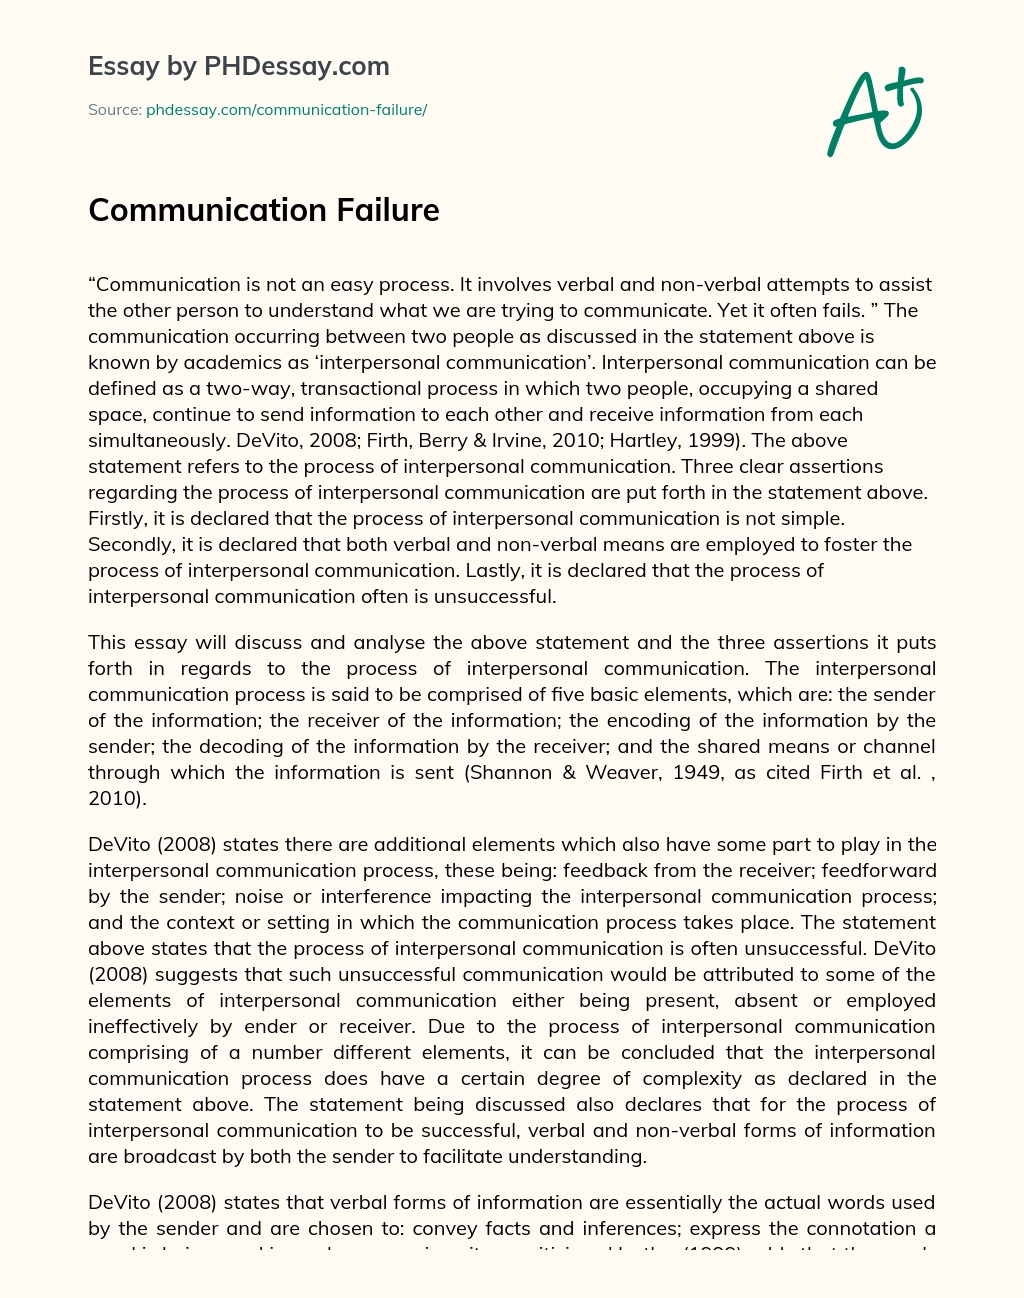 Communication Failure essay